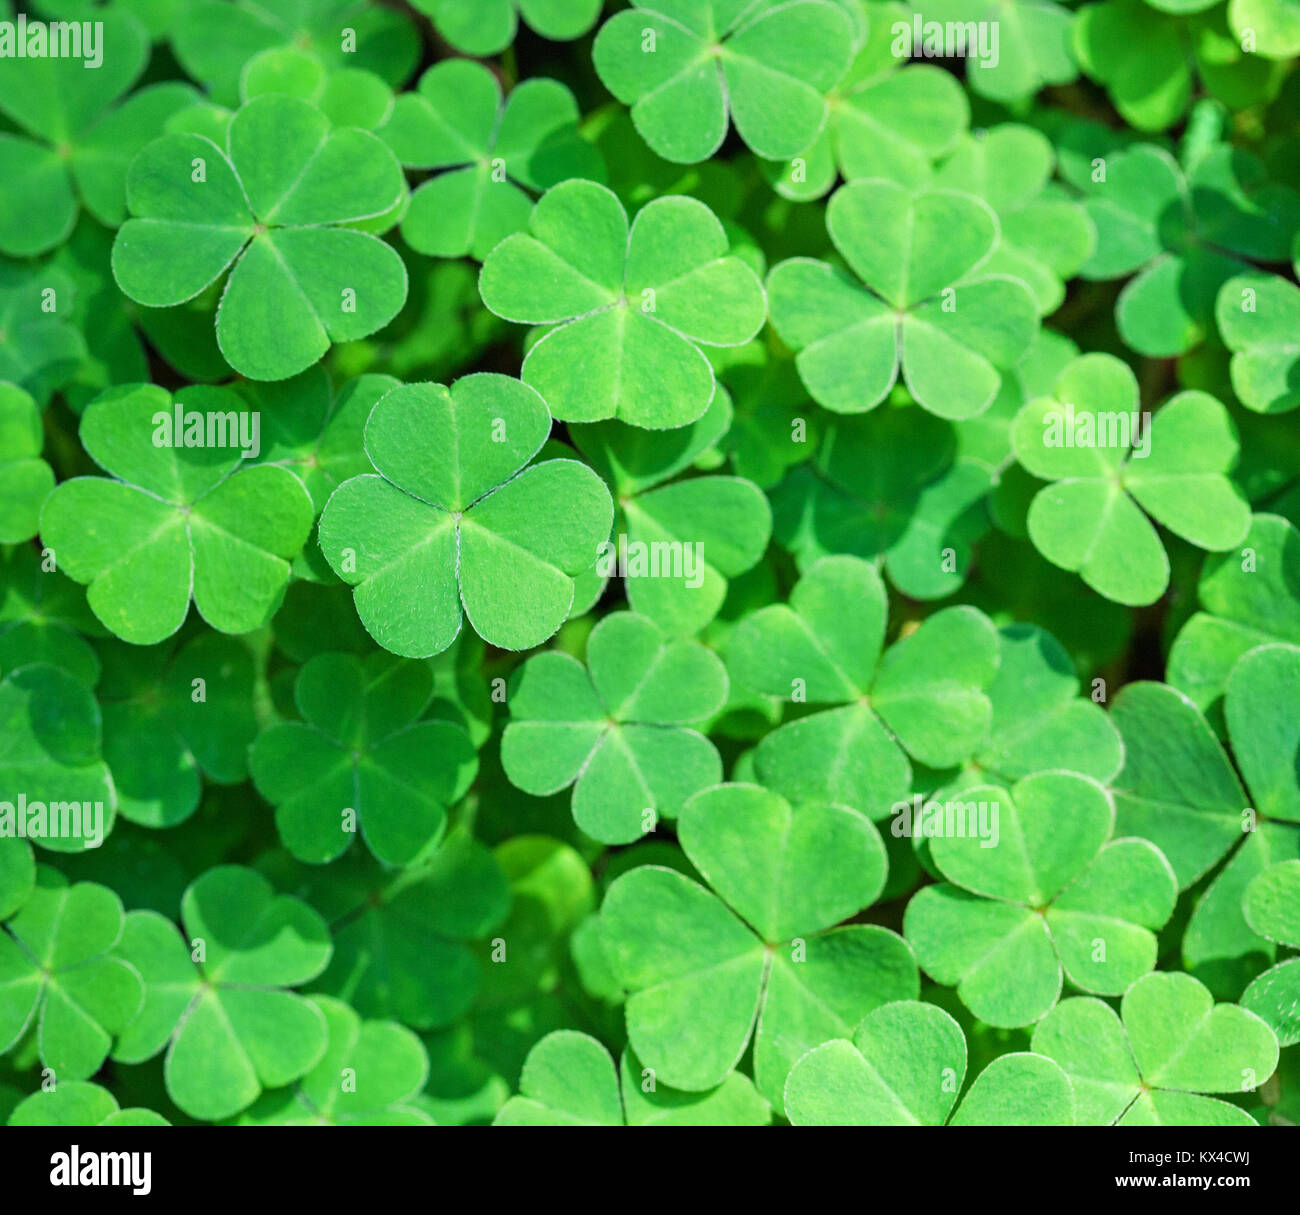 Green background with three-leaved shamrocks. St. Patrick's day holiday symbol.  Shallow DOF,  focus on near leaf. Stock Photo